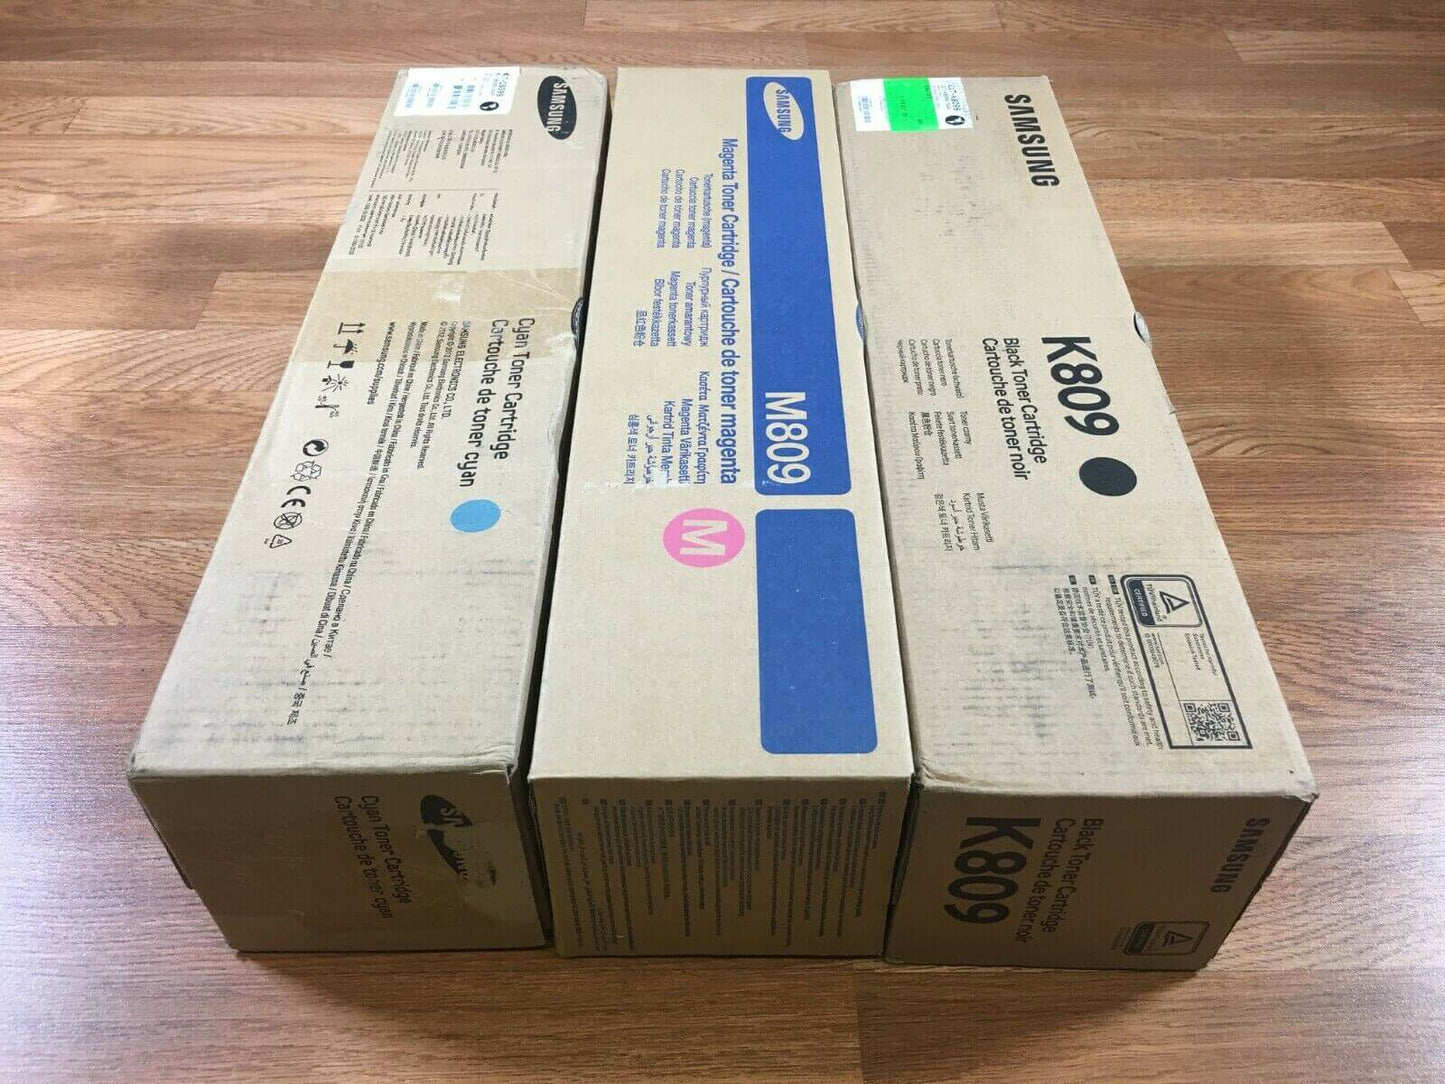 Lot Of 3 Genuine Samsung CLT-809S CMK For CLX-9201-9251-9301 FedEx 2Day Air!! - copier-clearance-center